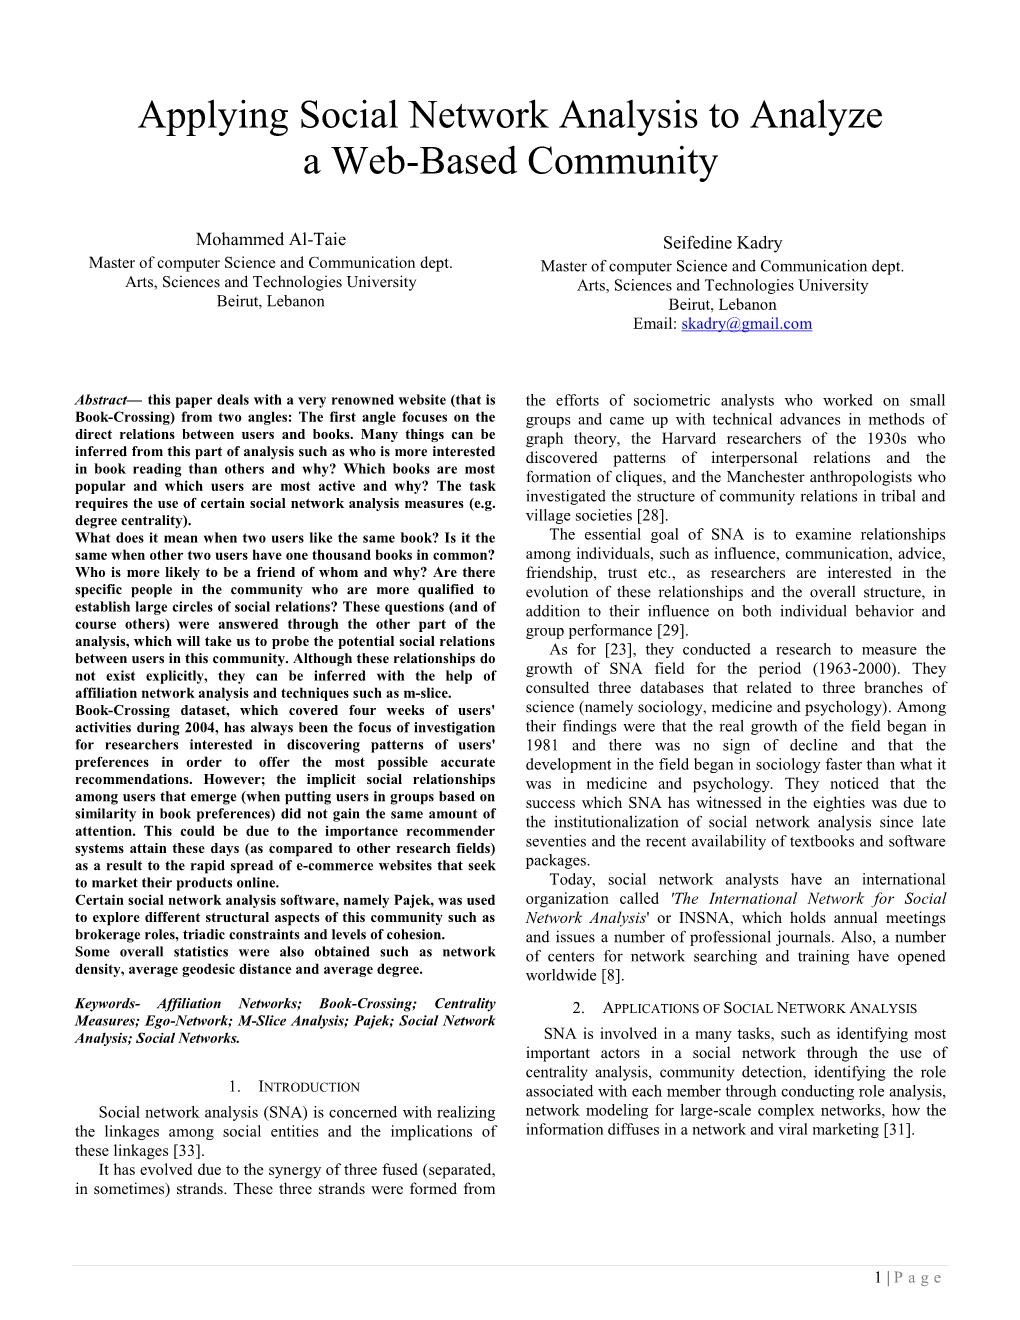 Applying Social Network Analysis to Analyze a Web-Based Community